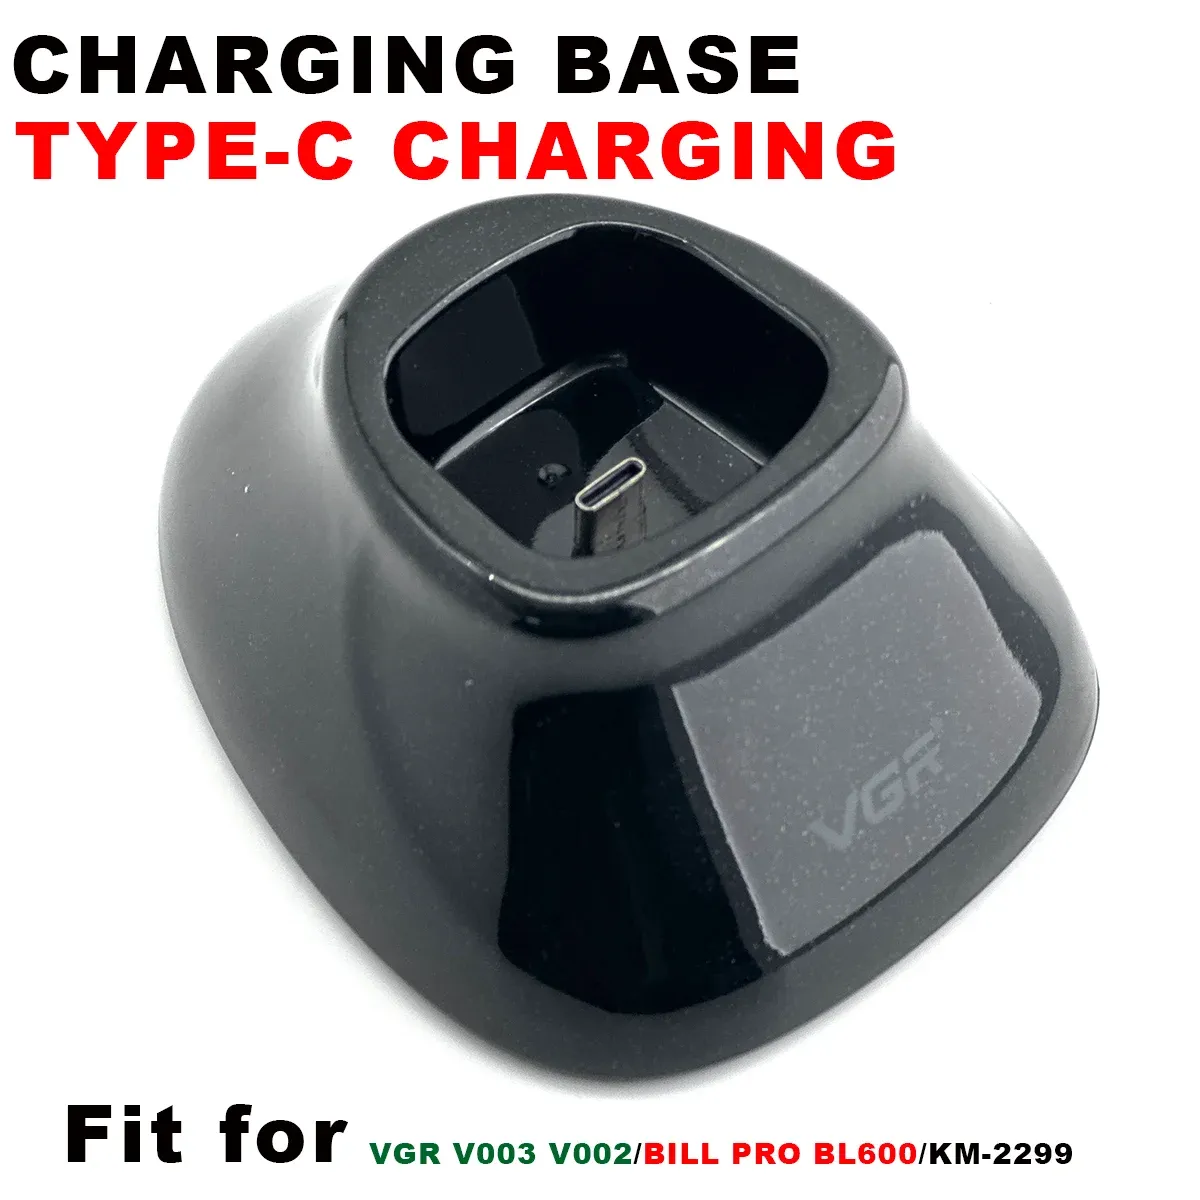 Color:Charging base